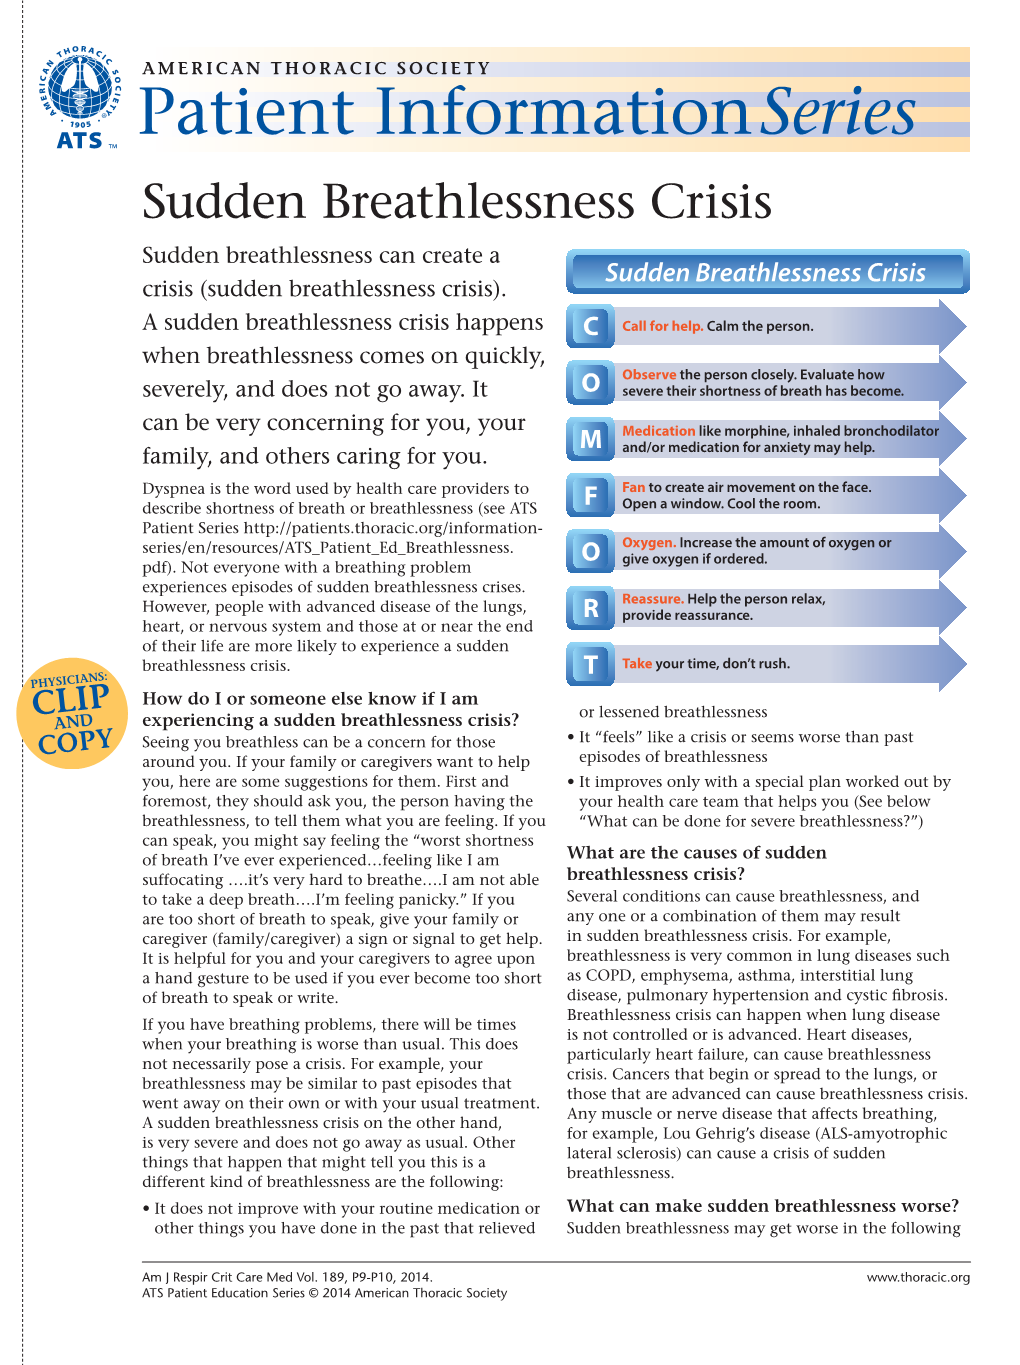 Sudden Breathlessness Crisis Sudden Breathlessness Can Create a Sudden Breathlessness Crisis Crisis (Sudden Breathlessness Crisis)